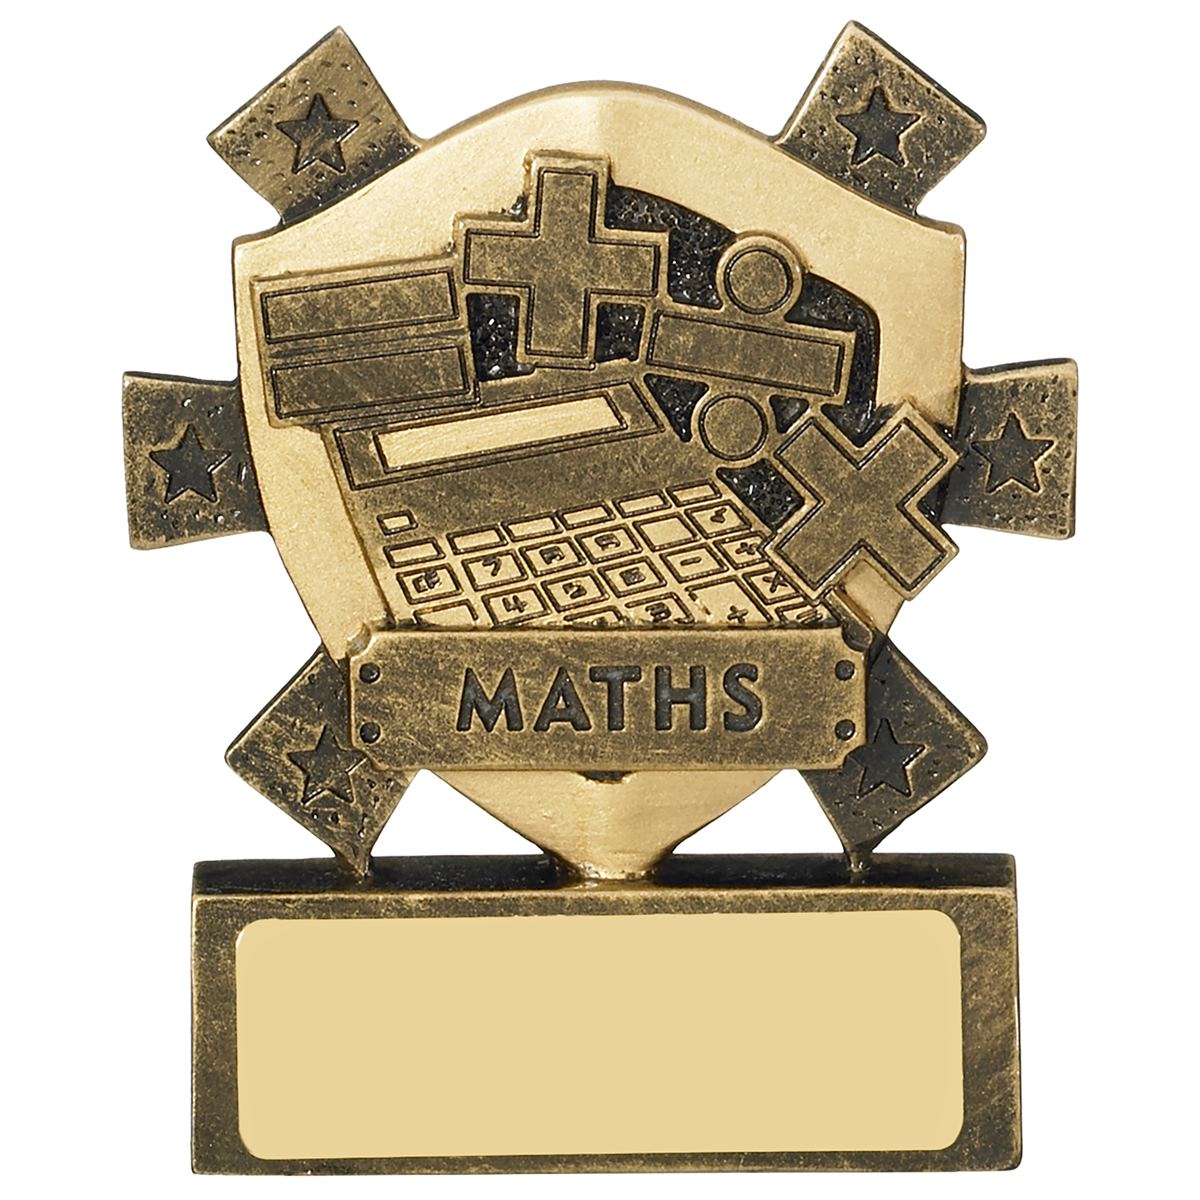 Maths Mini Shield Trophy